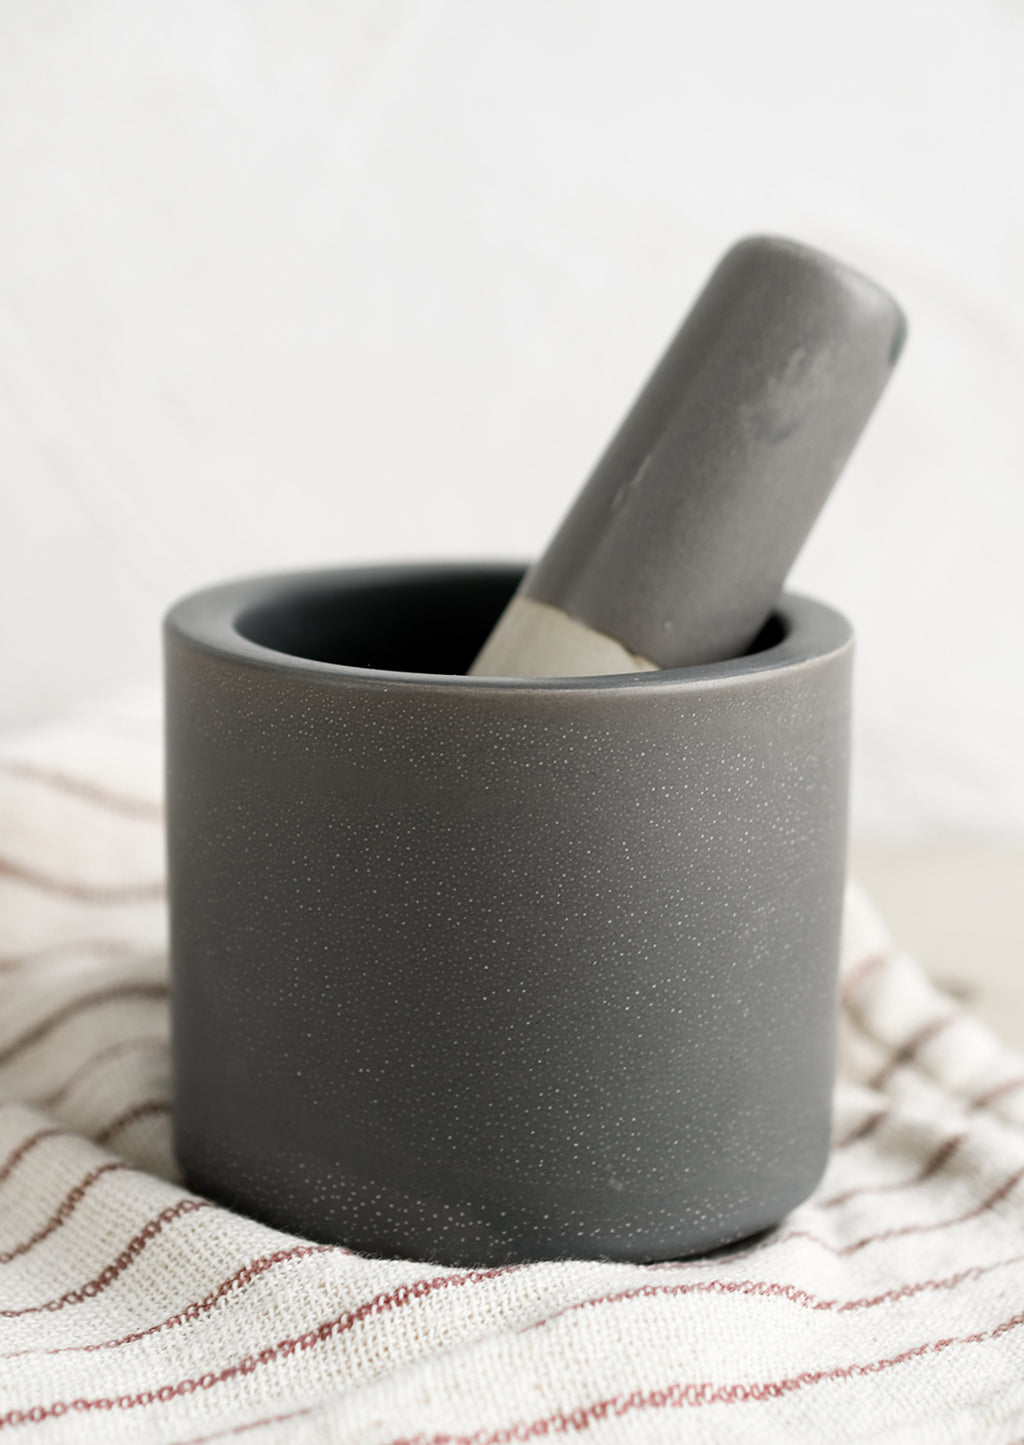 1: A dark grey colored ceramic mortar and pestle set.